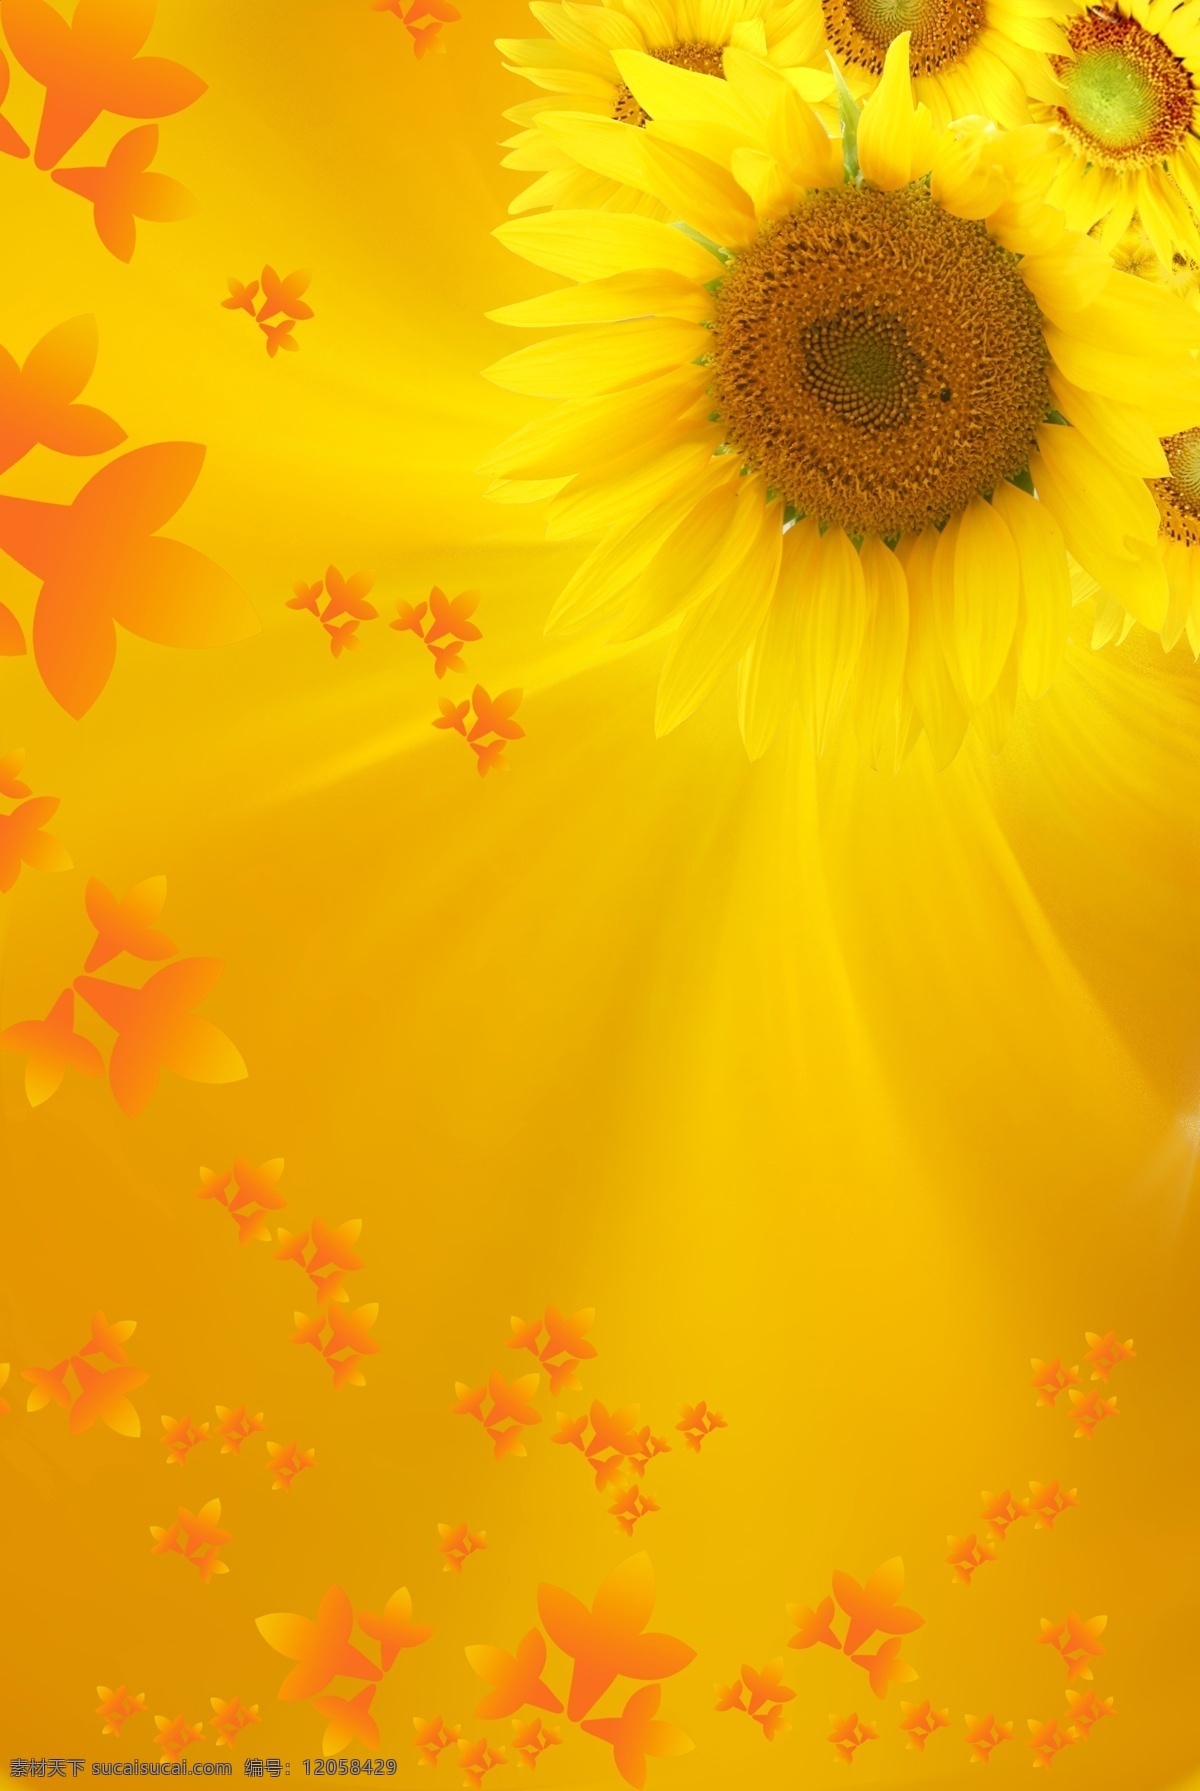 向日葵背景 温暖 向日葵 花朵 背景 黄色